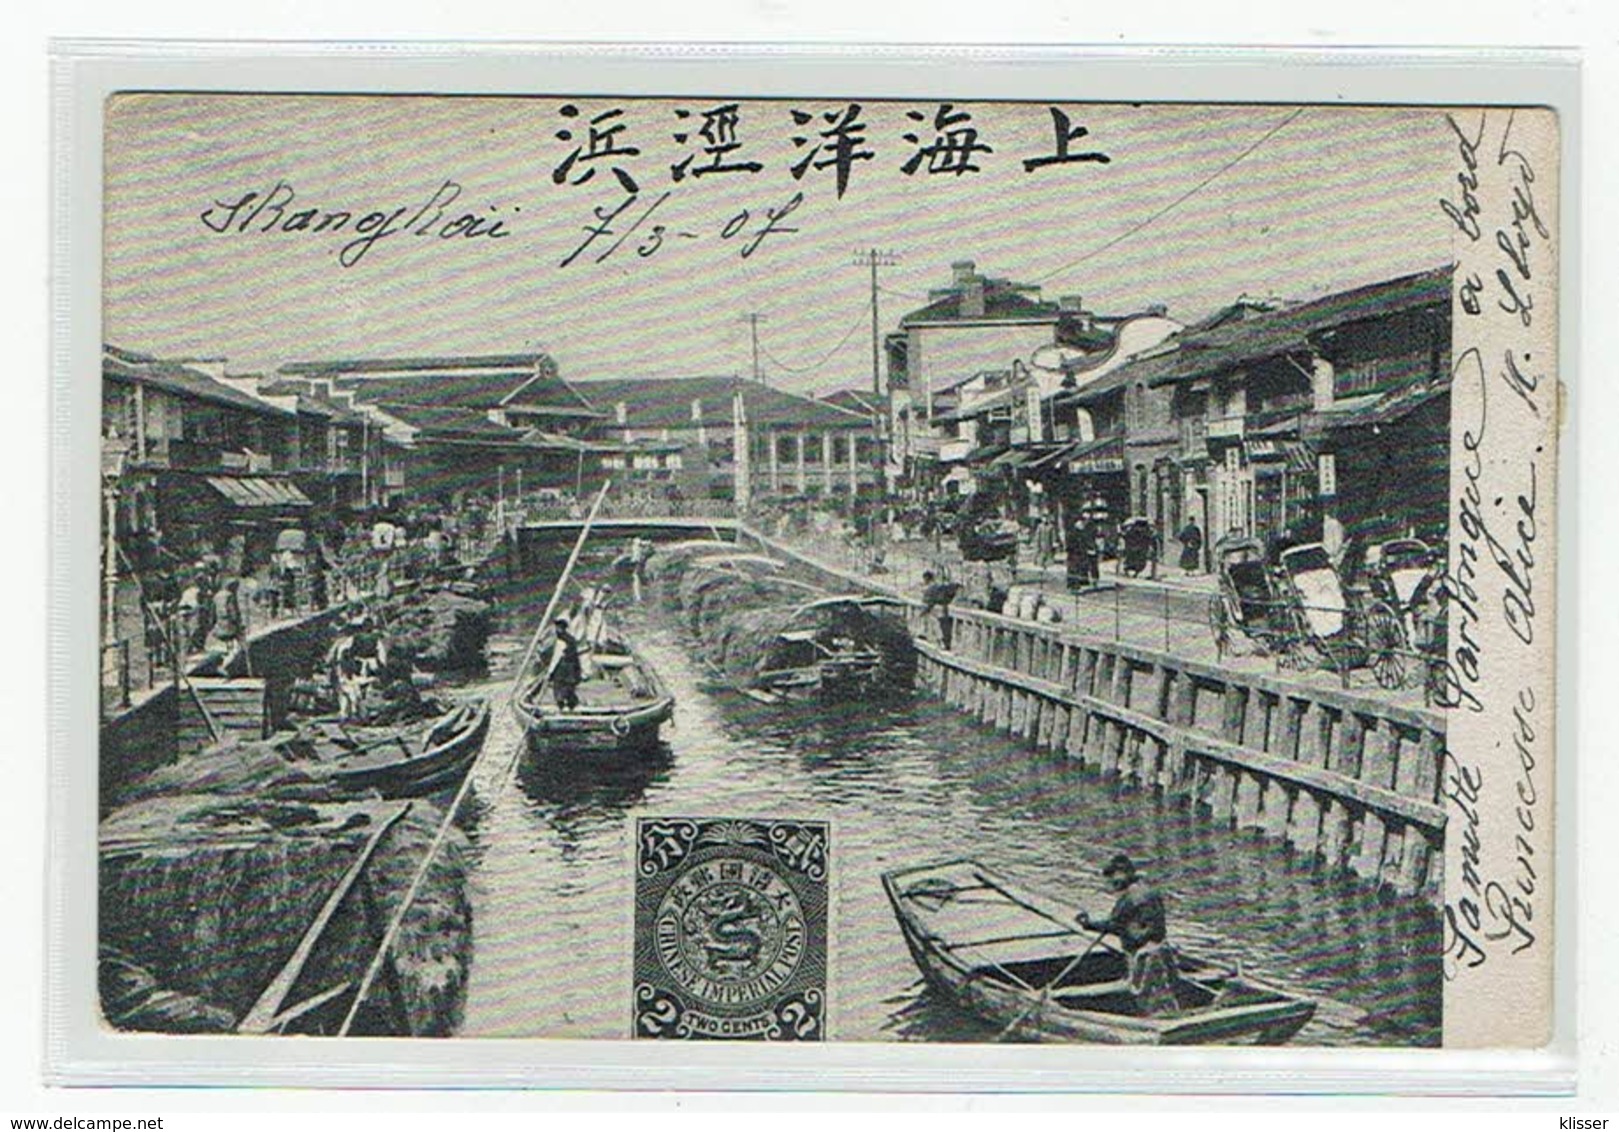 Shanghai Canal - China